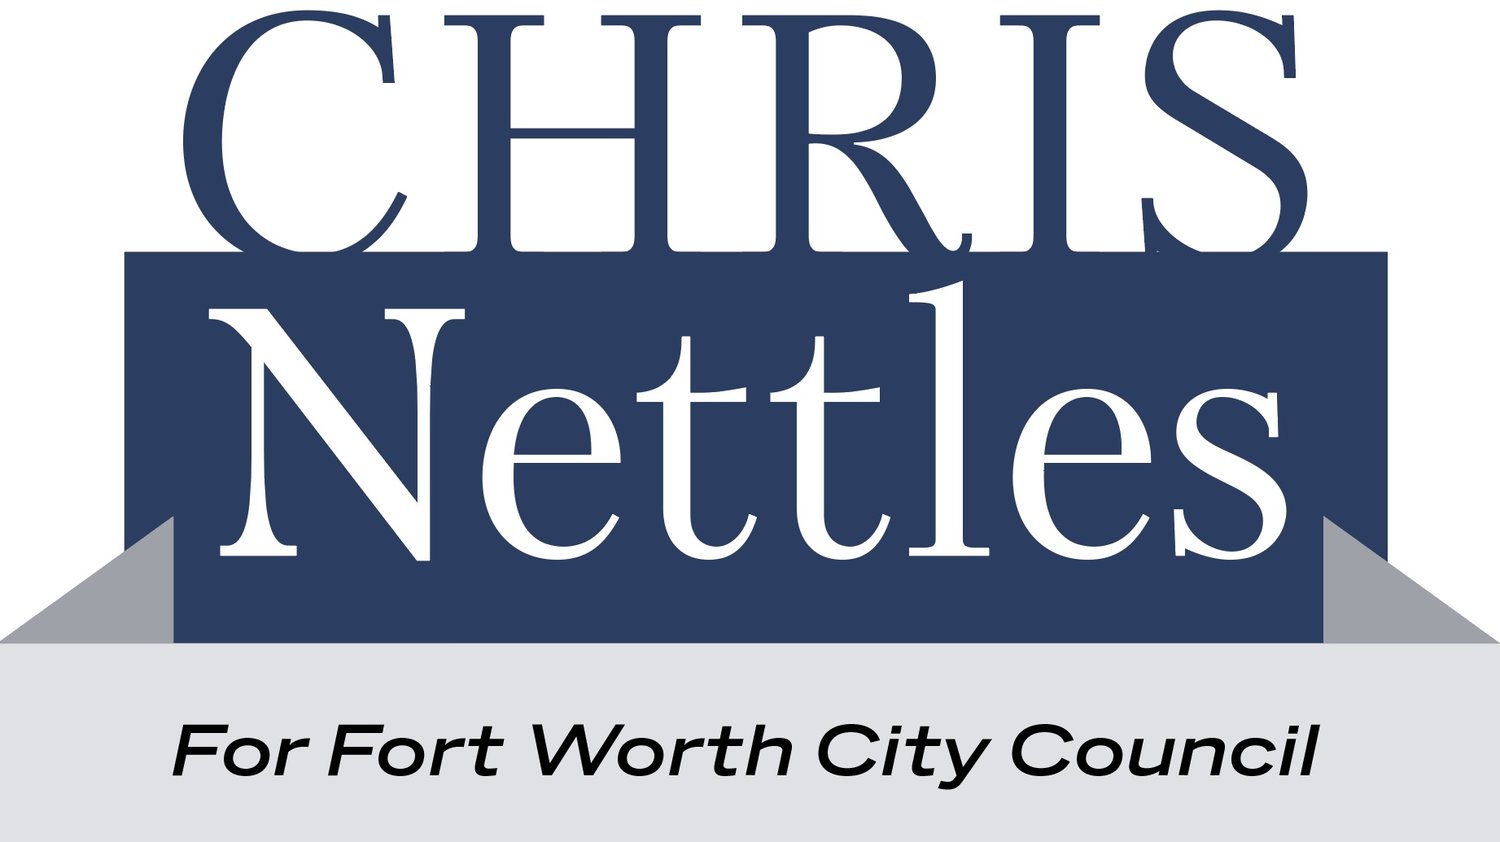 Chris Nettles for City Council